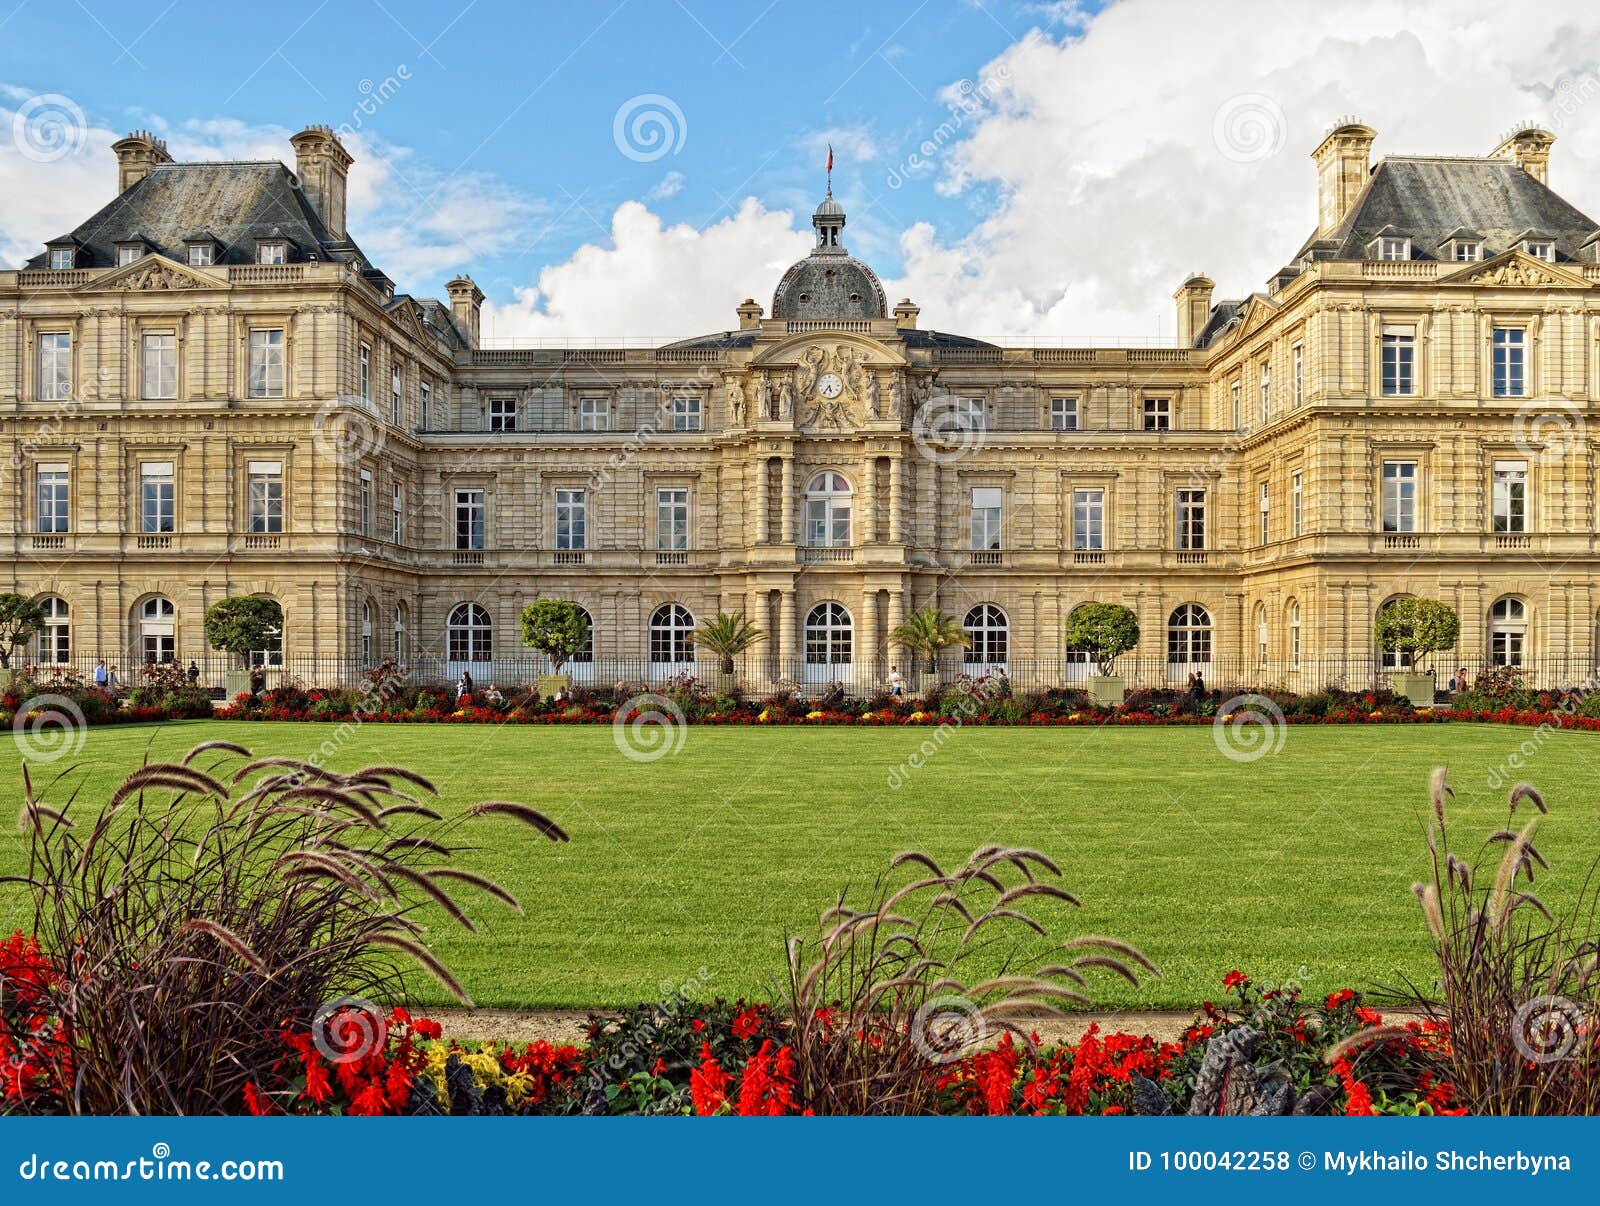 luxembourg palace, paris.